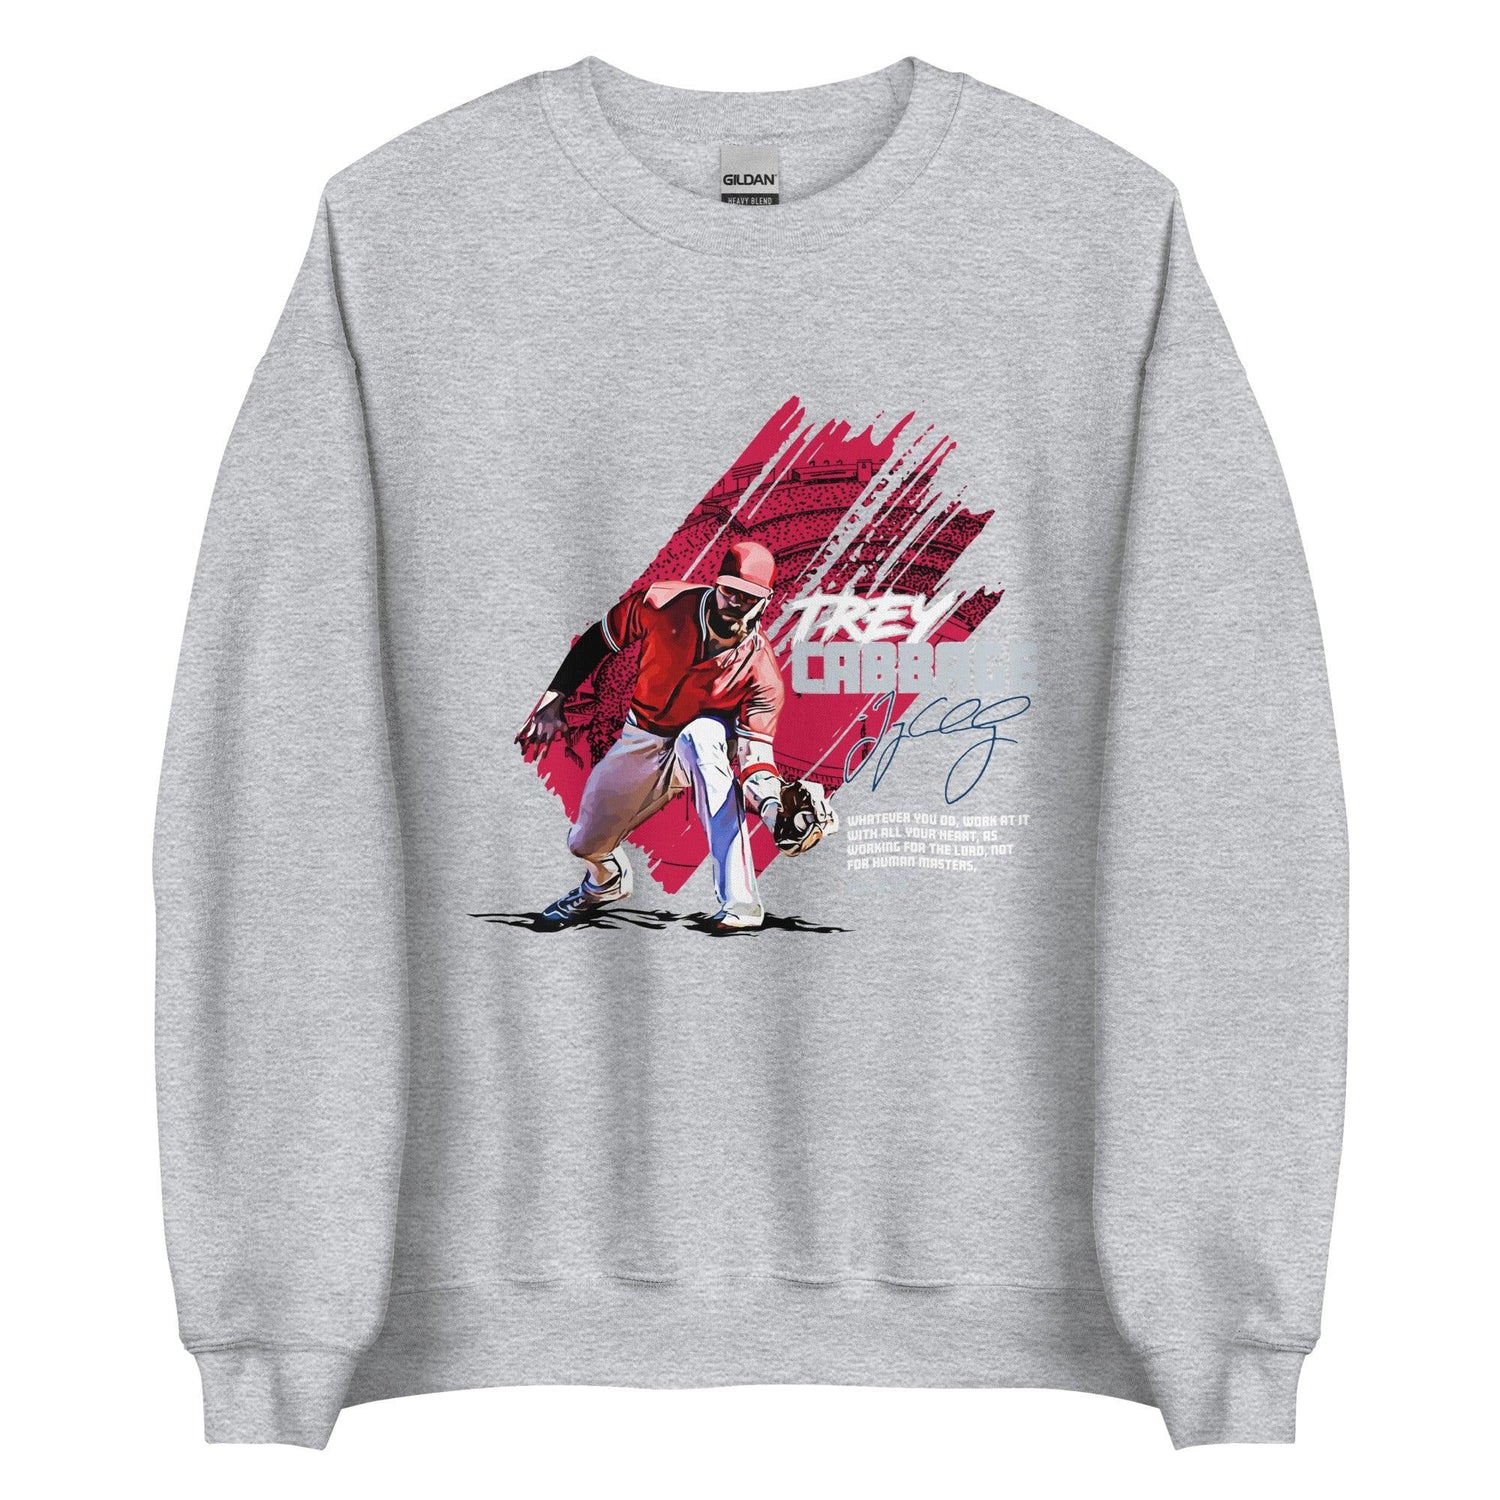 Trey Cabbage “Signature” Sweatshirt - Fan Arch